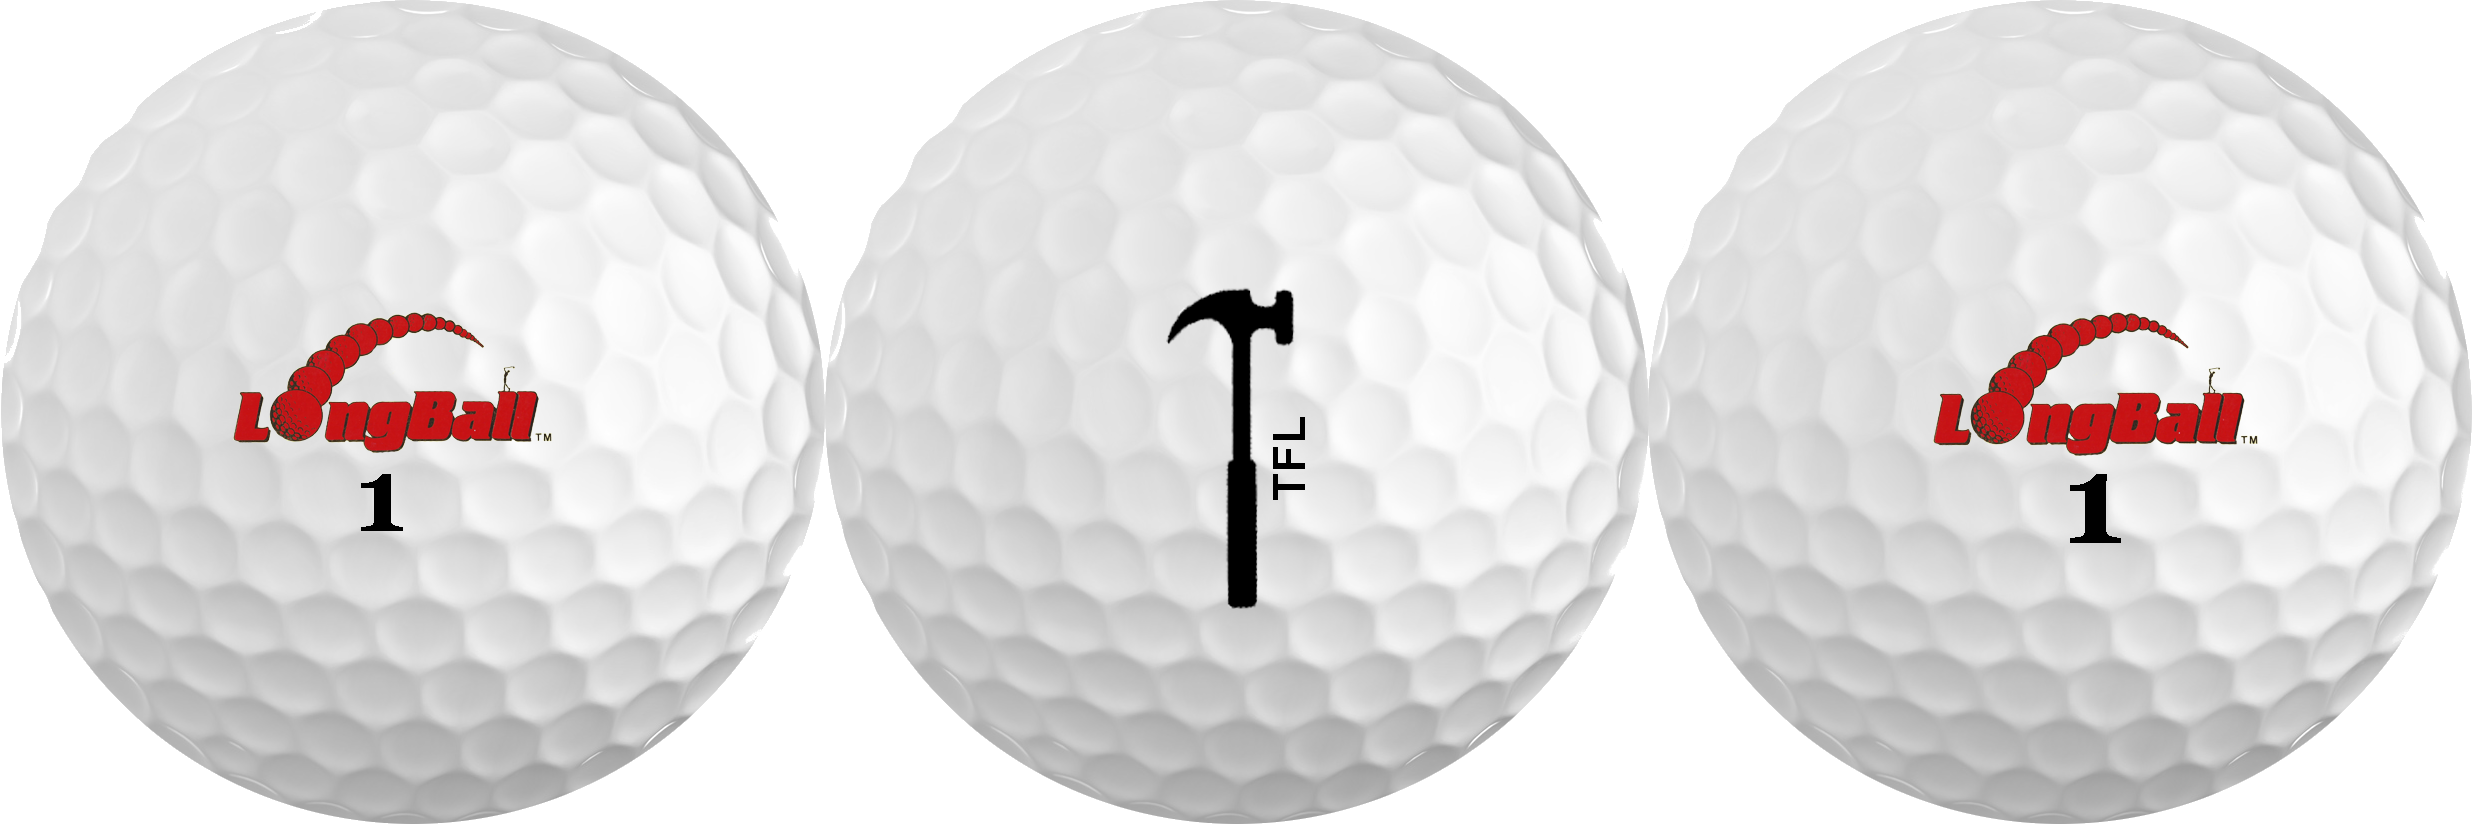 The World's Longest Golfball